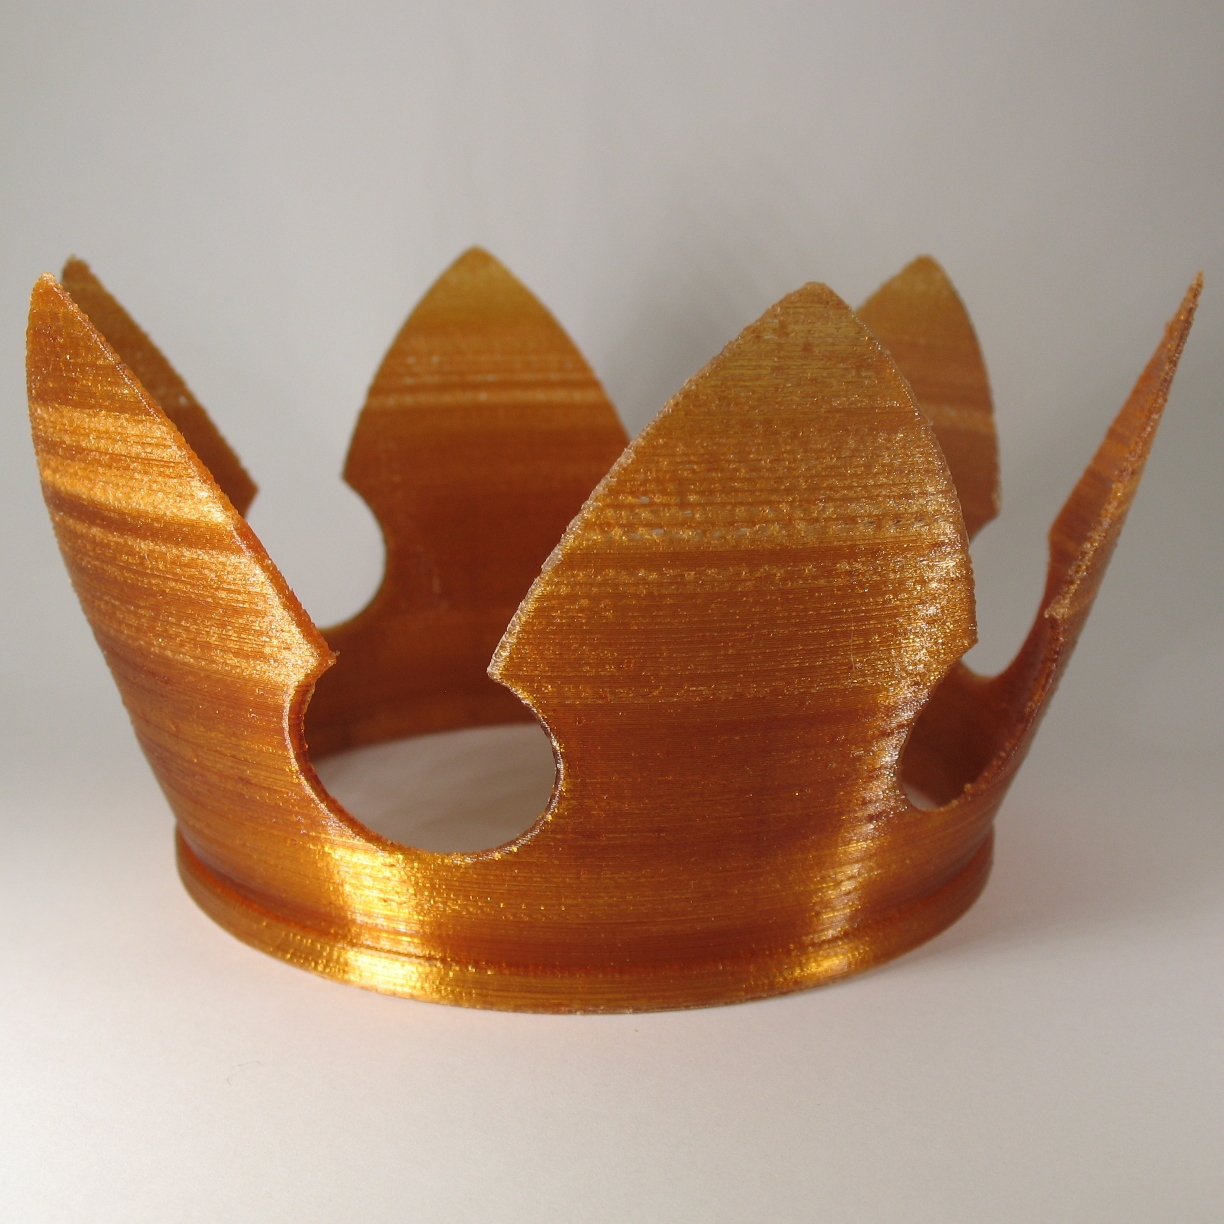 Sora's Crown (Kingdom hearts)